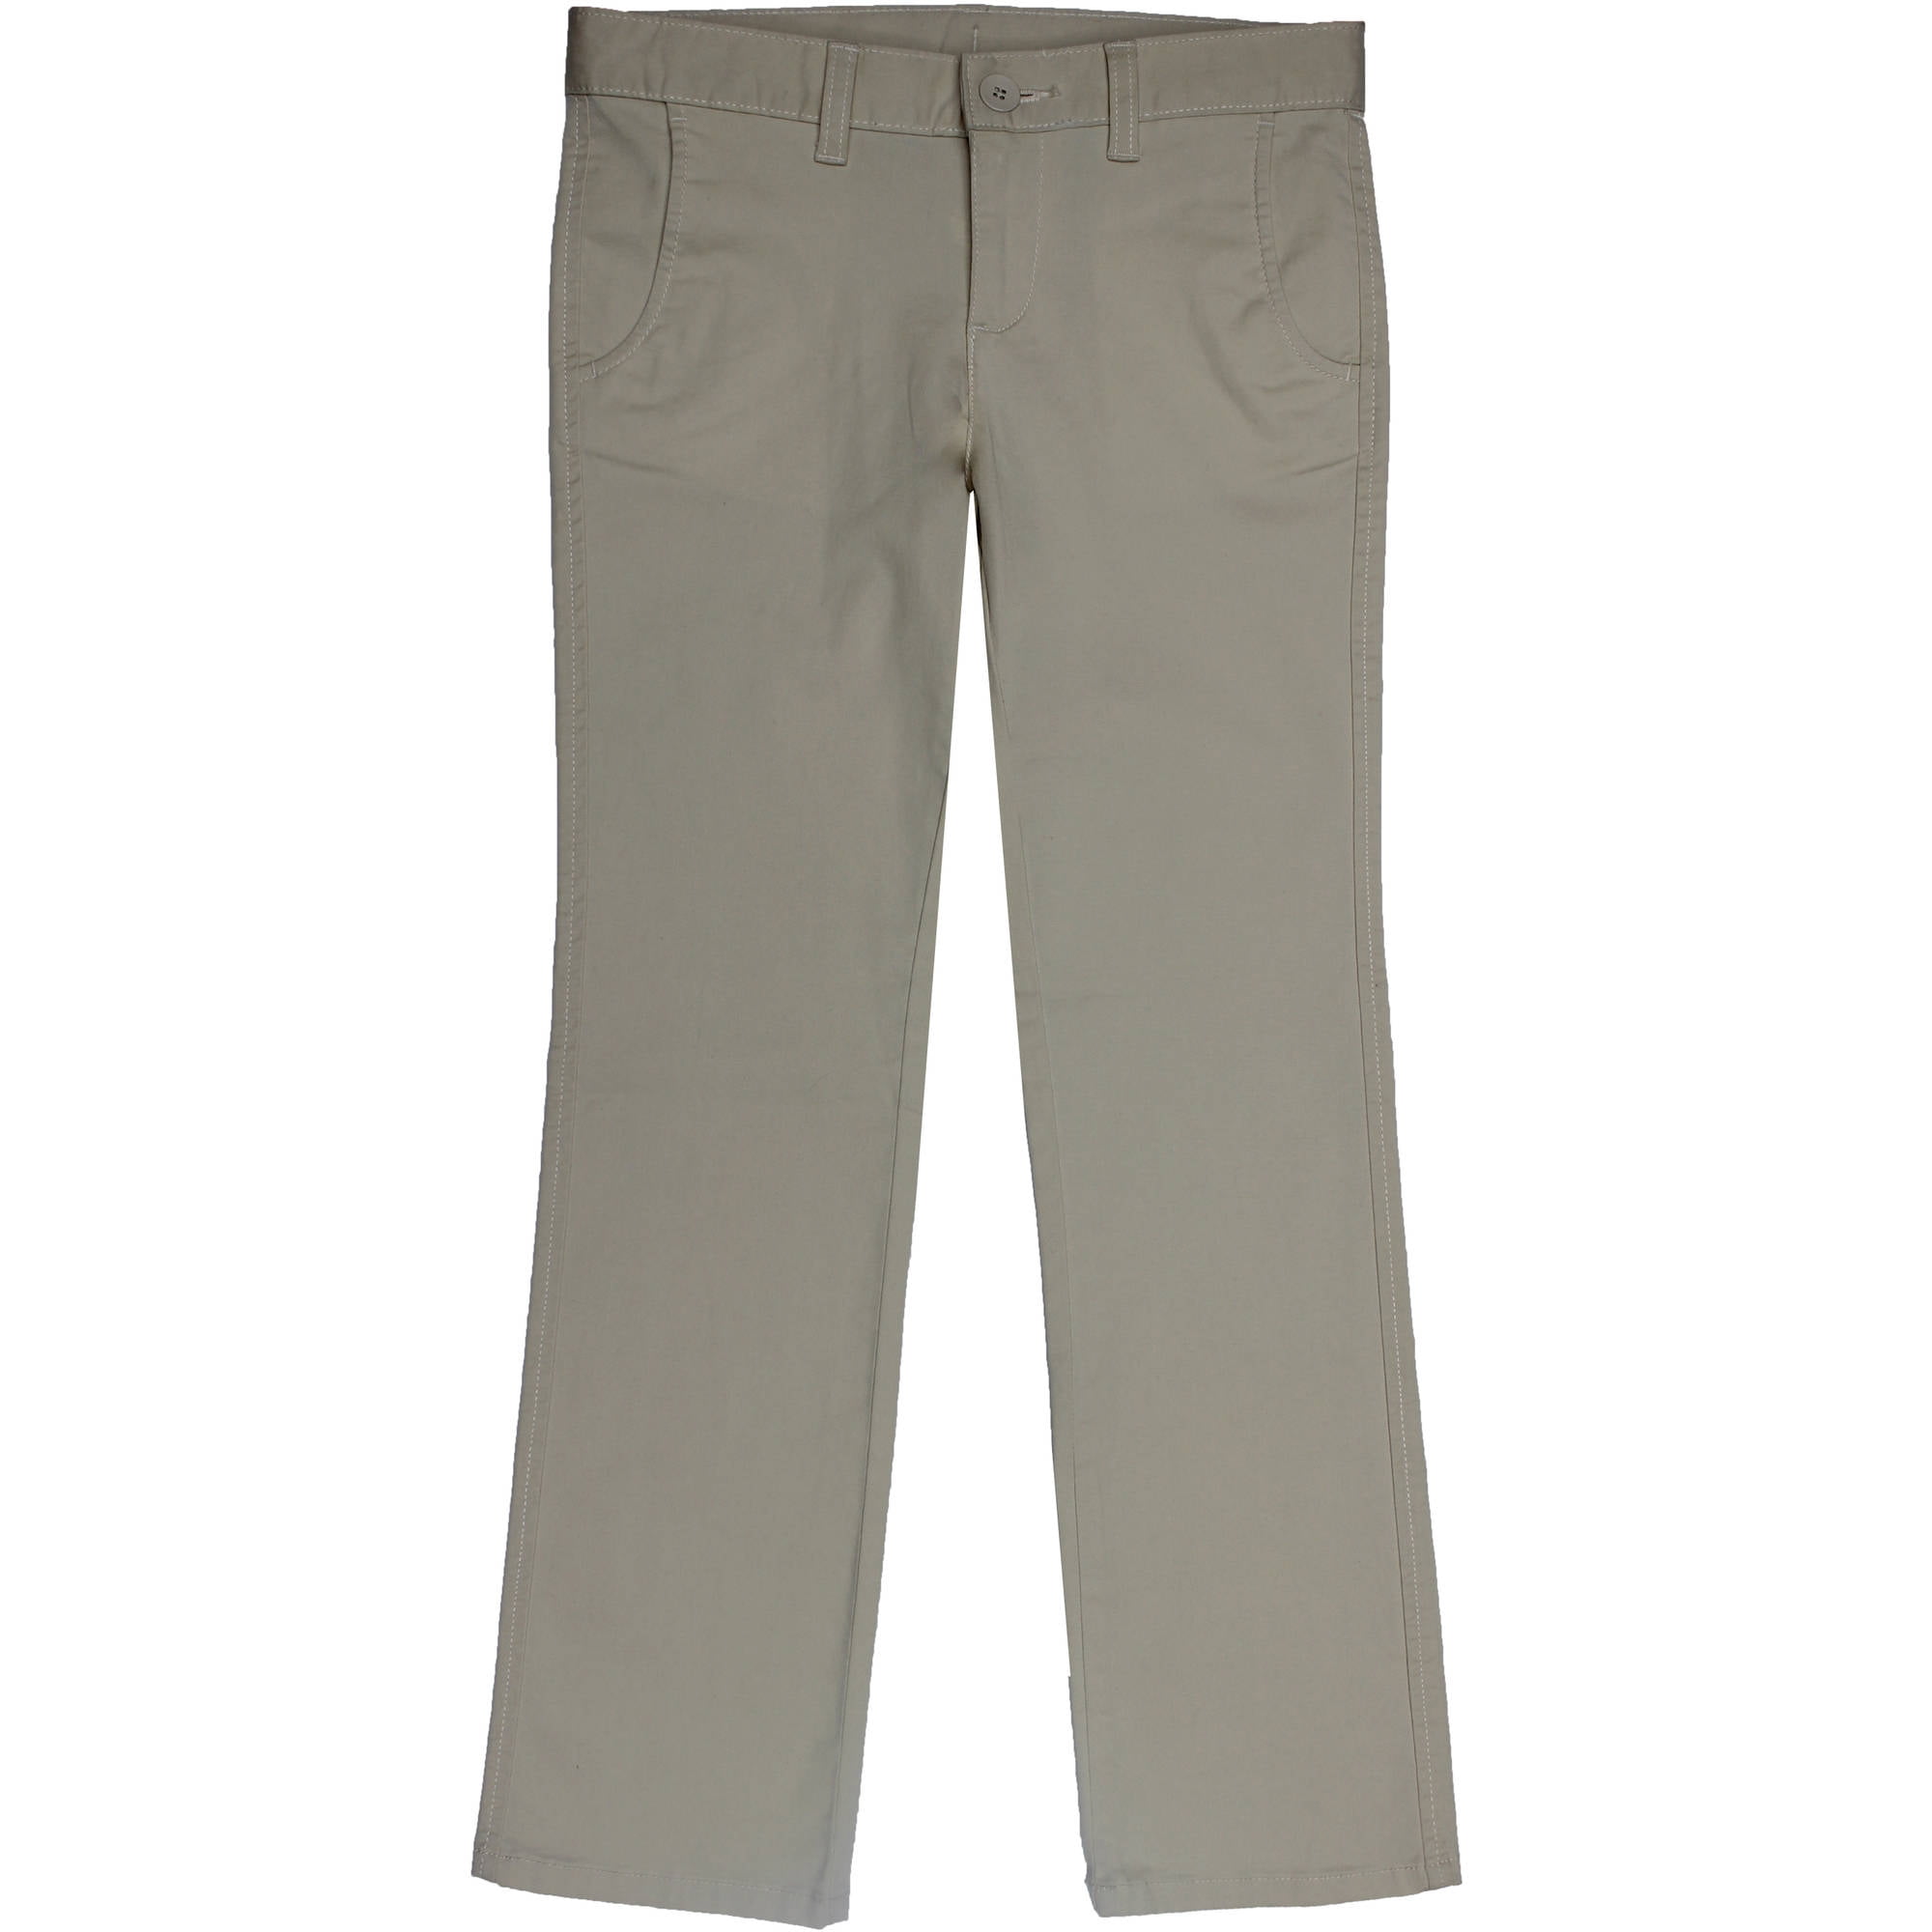 George School Uniform Girls Plus Size Flat Front Pants - Walmart.com